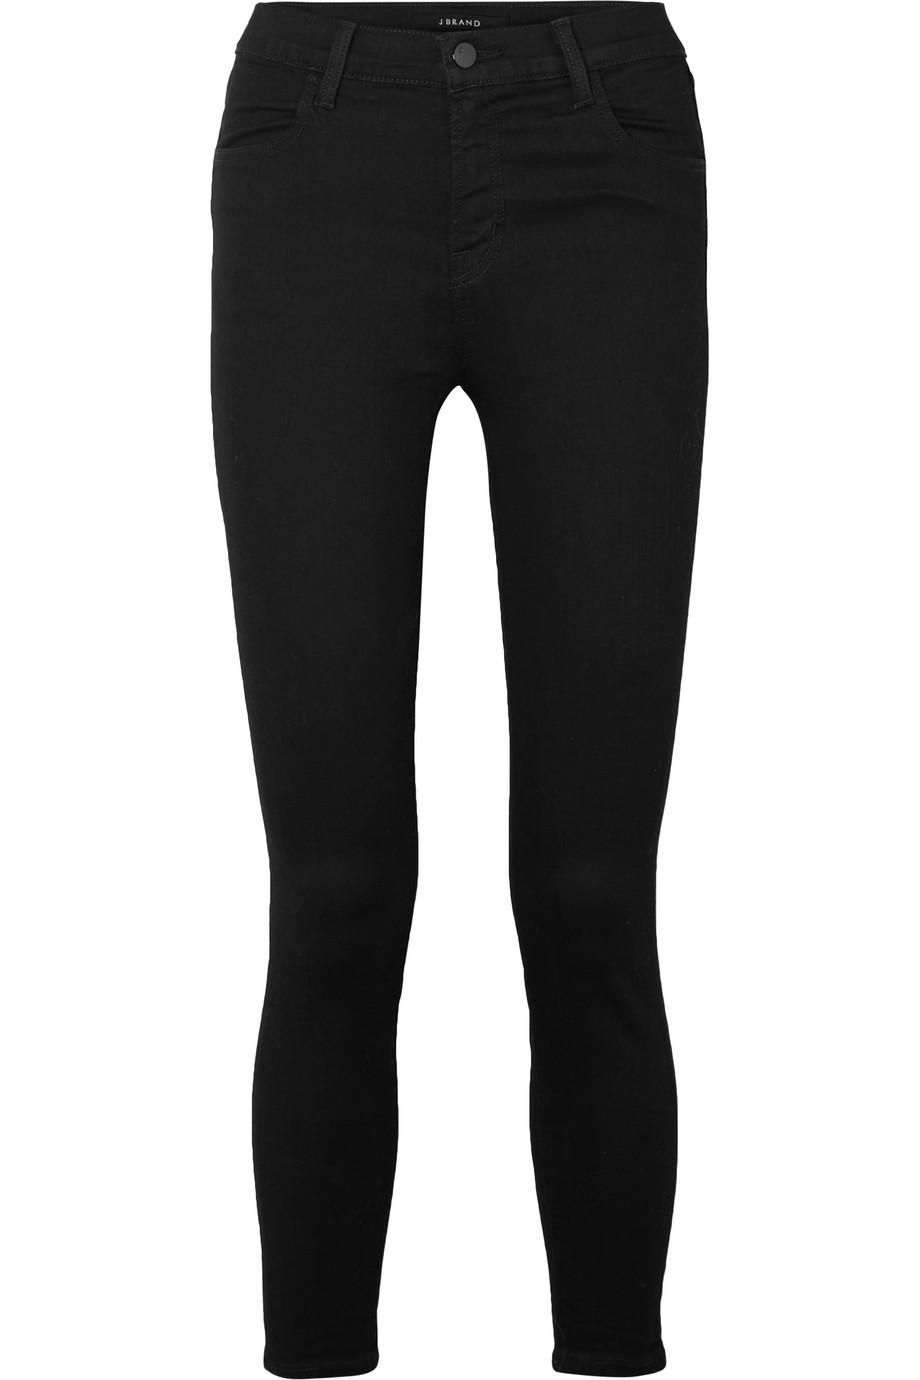 What Jessica Biel Wears With Black Skinny Jeans | Who What Wear